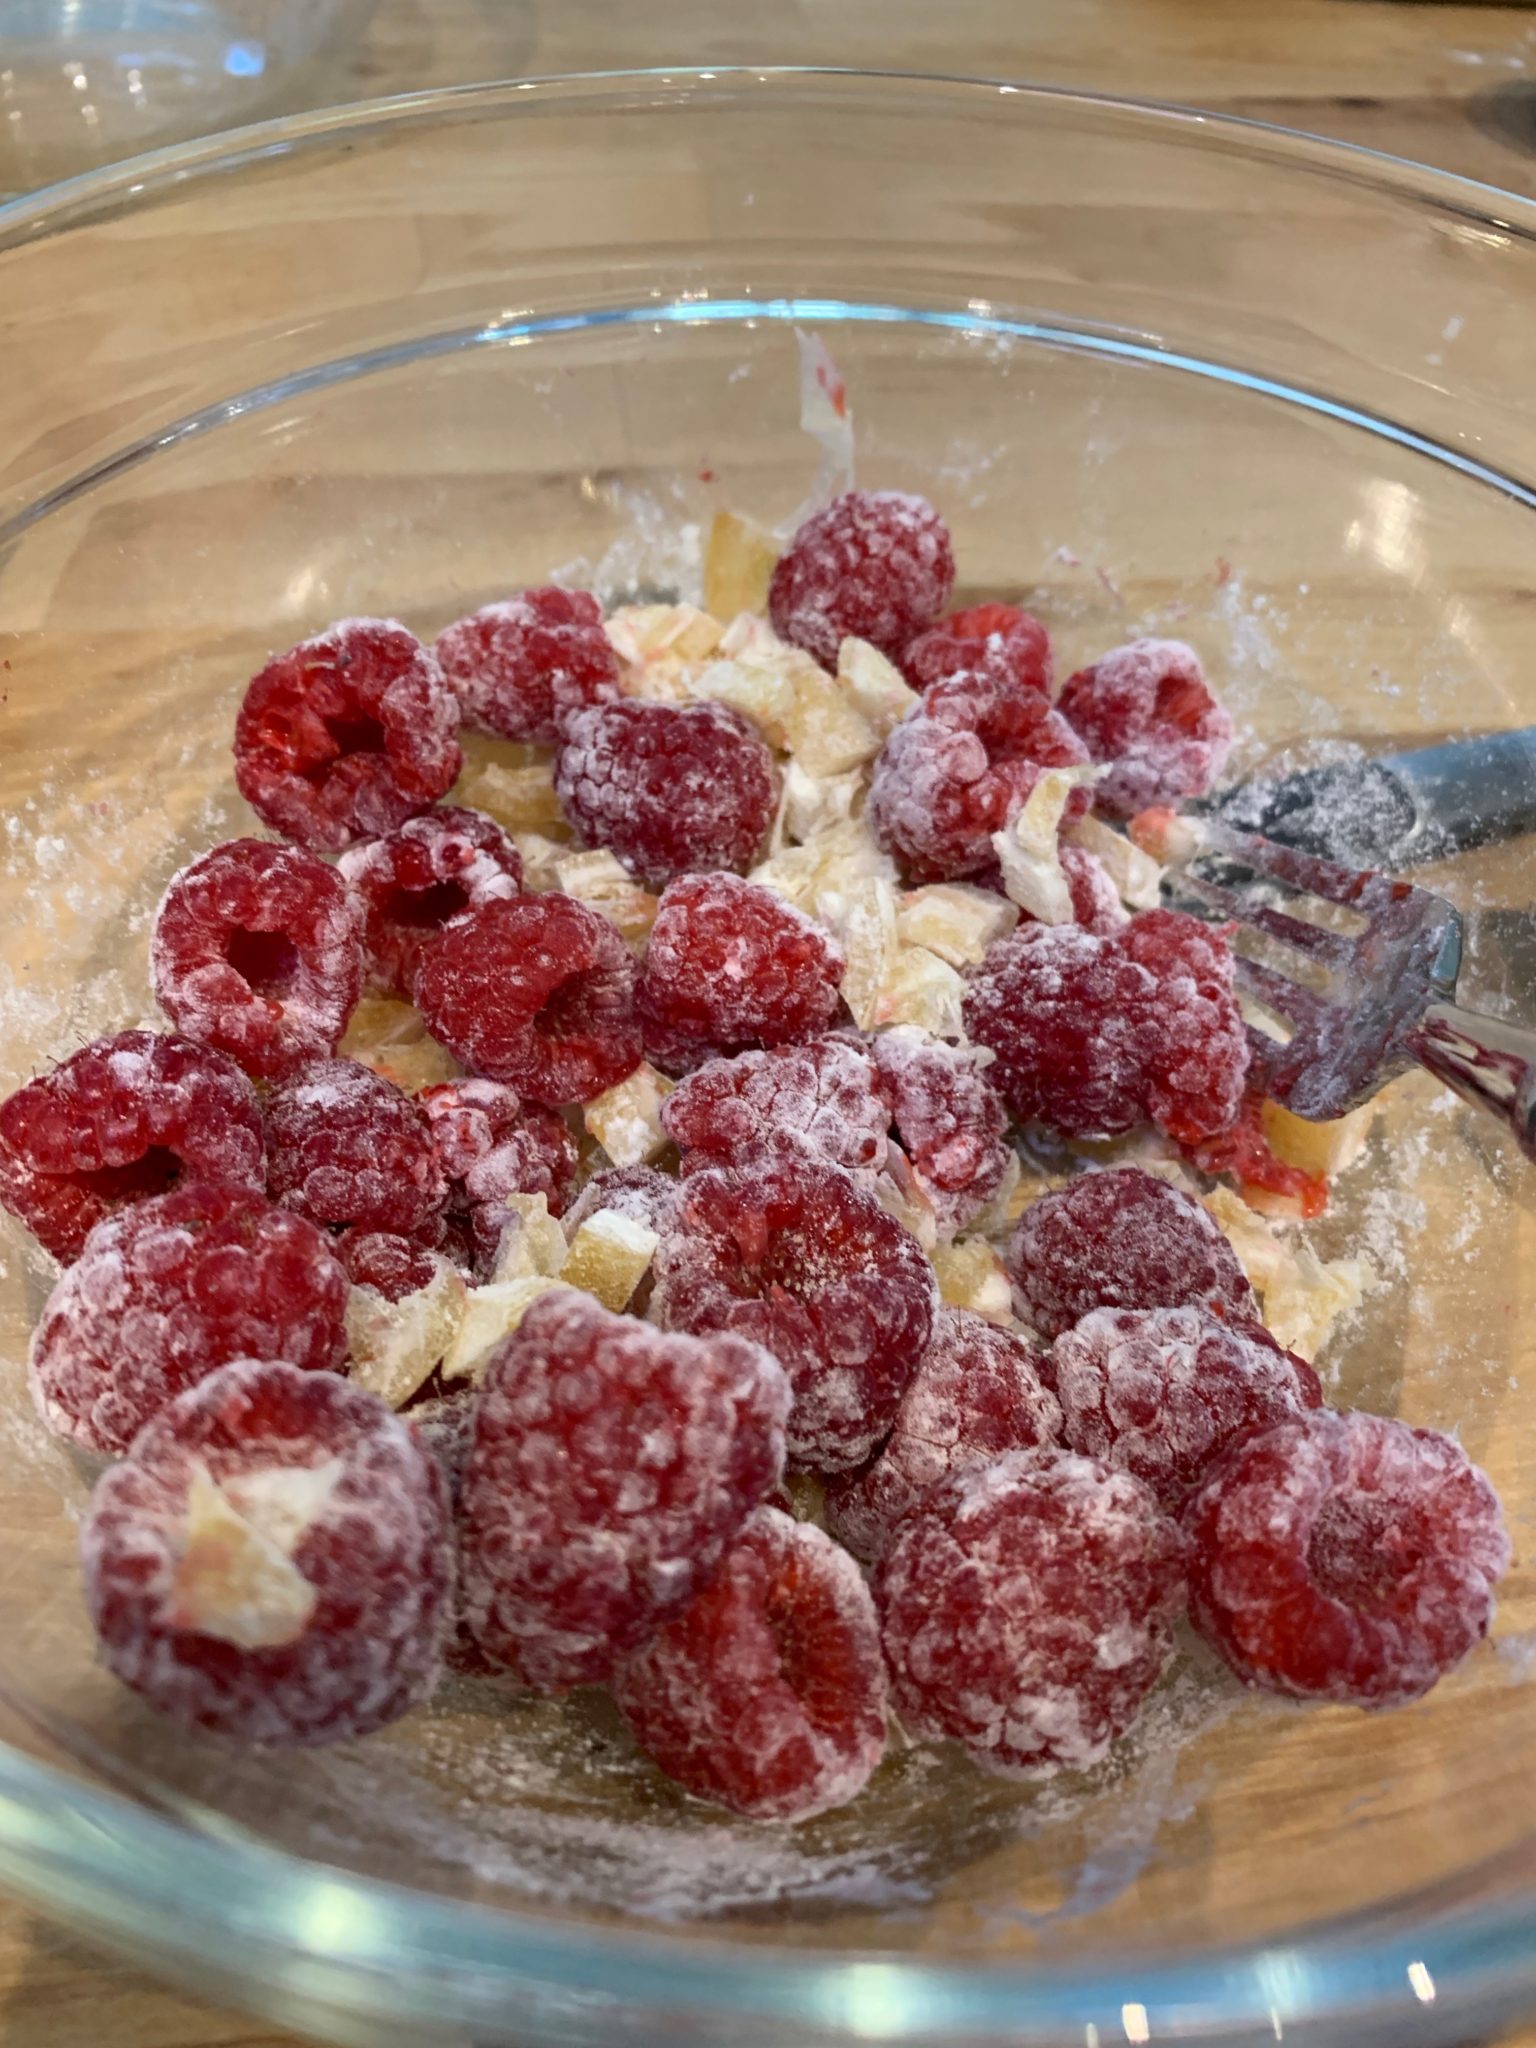 Flour coated lemon dice and raspberries